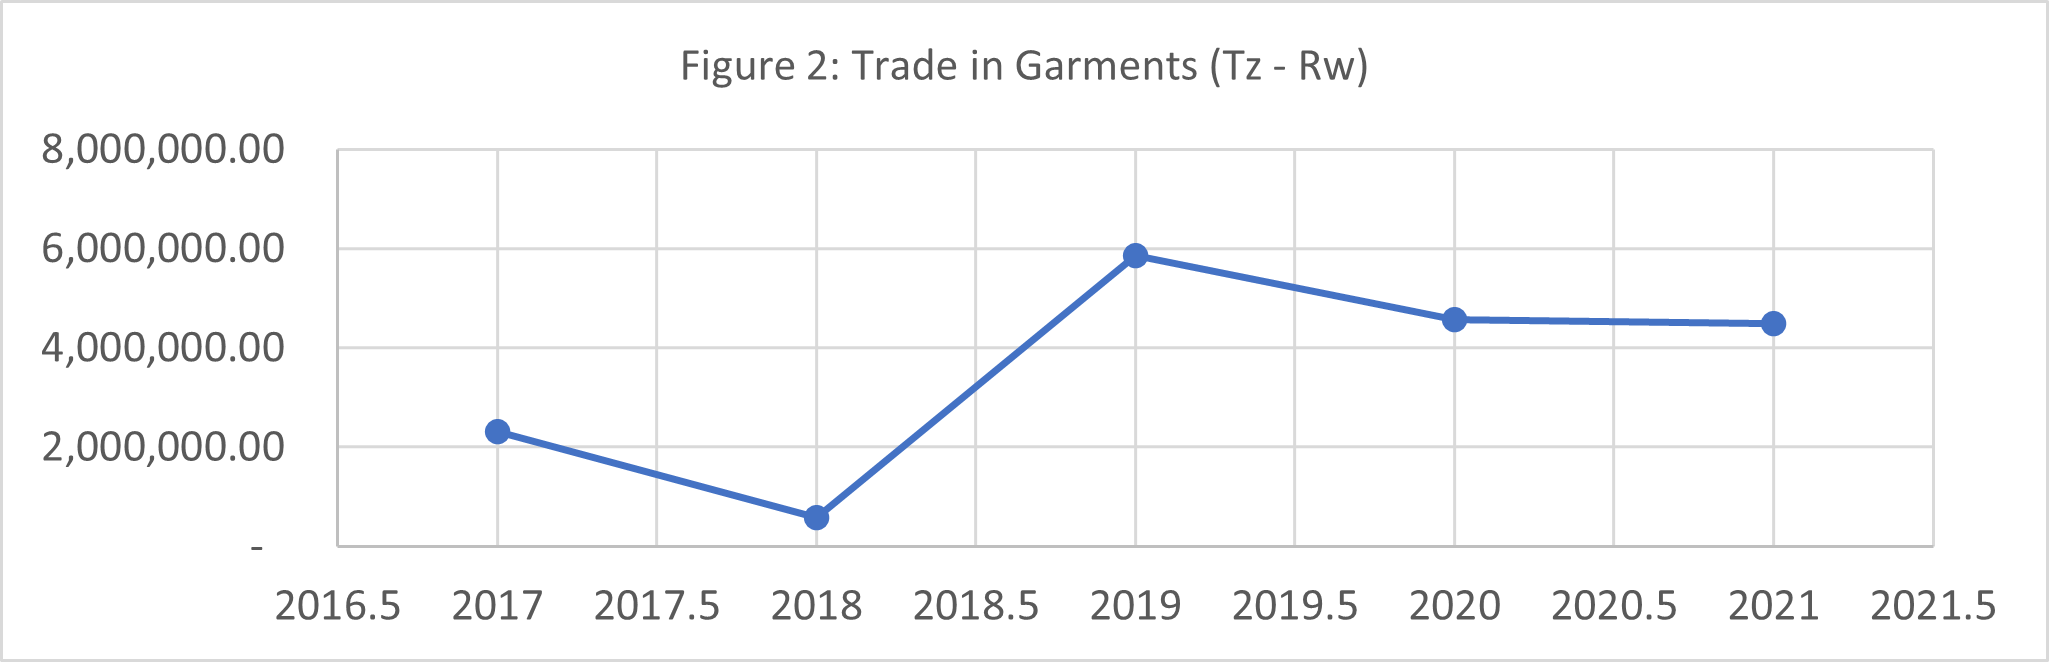 Figure 2: Trade in Garments (Tz - Rw)